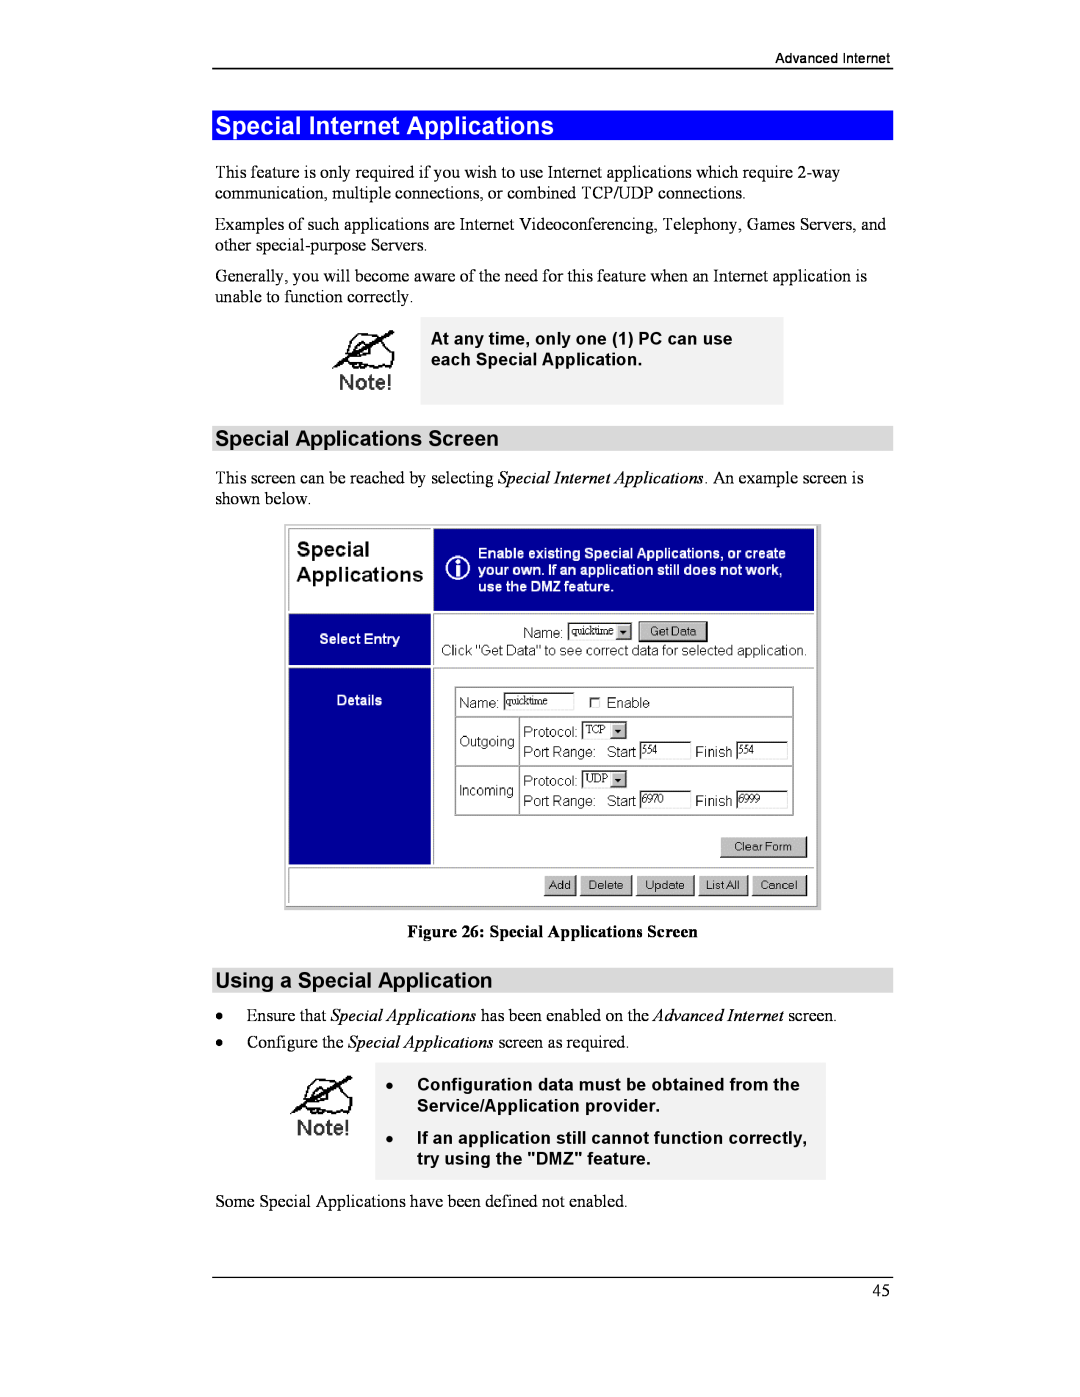 CNET CNWR-811P manual Special Internet Applications, Special Applications Screen, Using a Special Application 